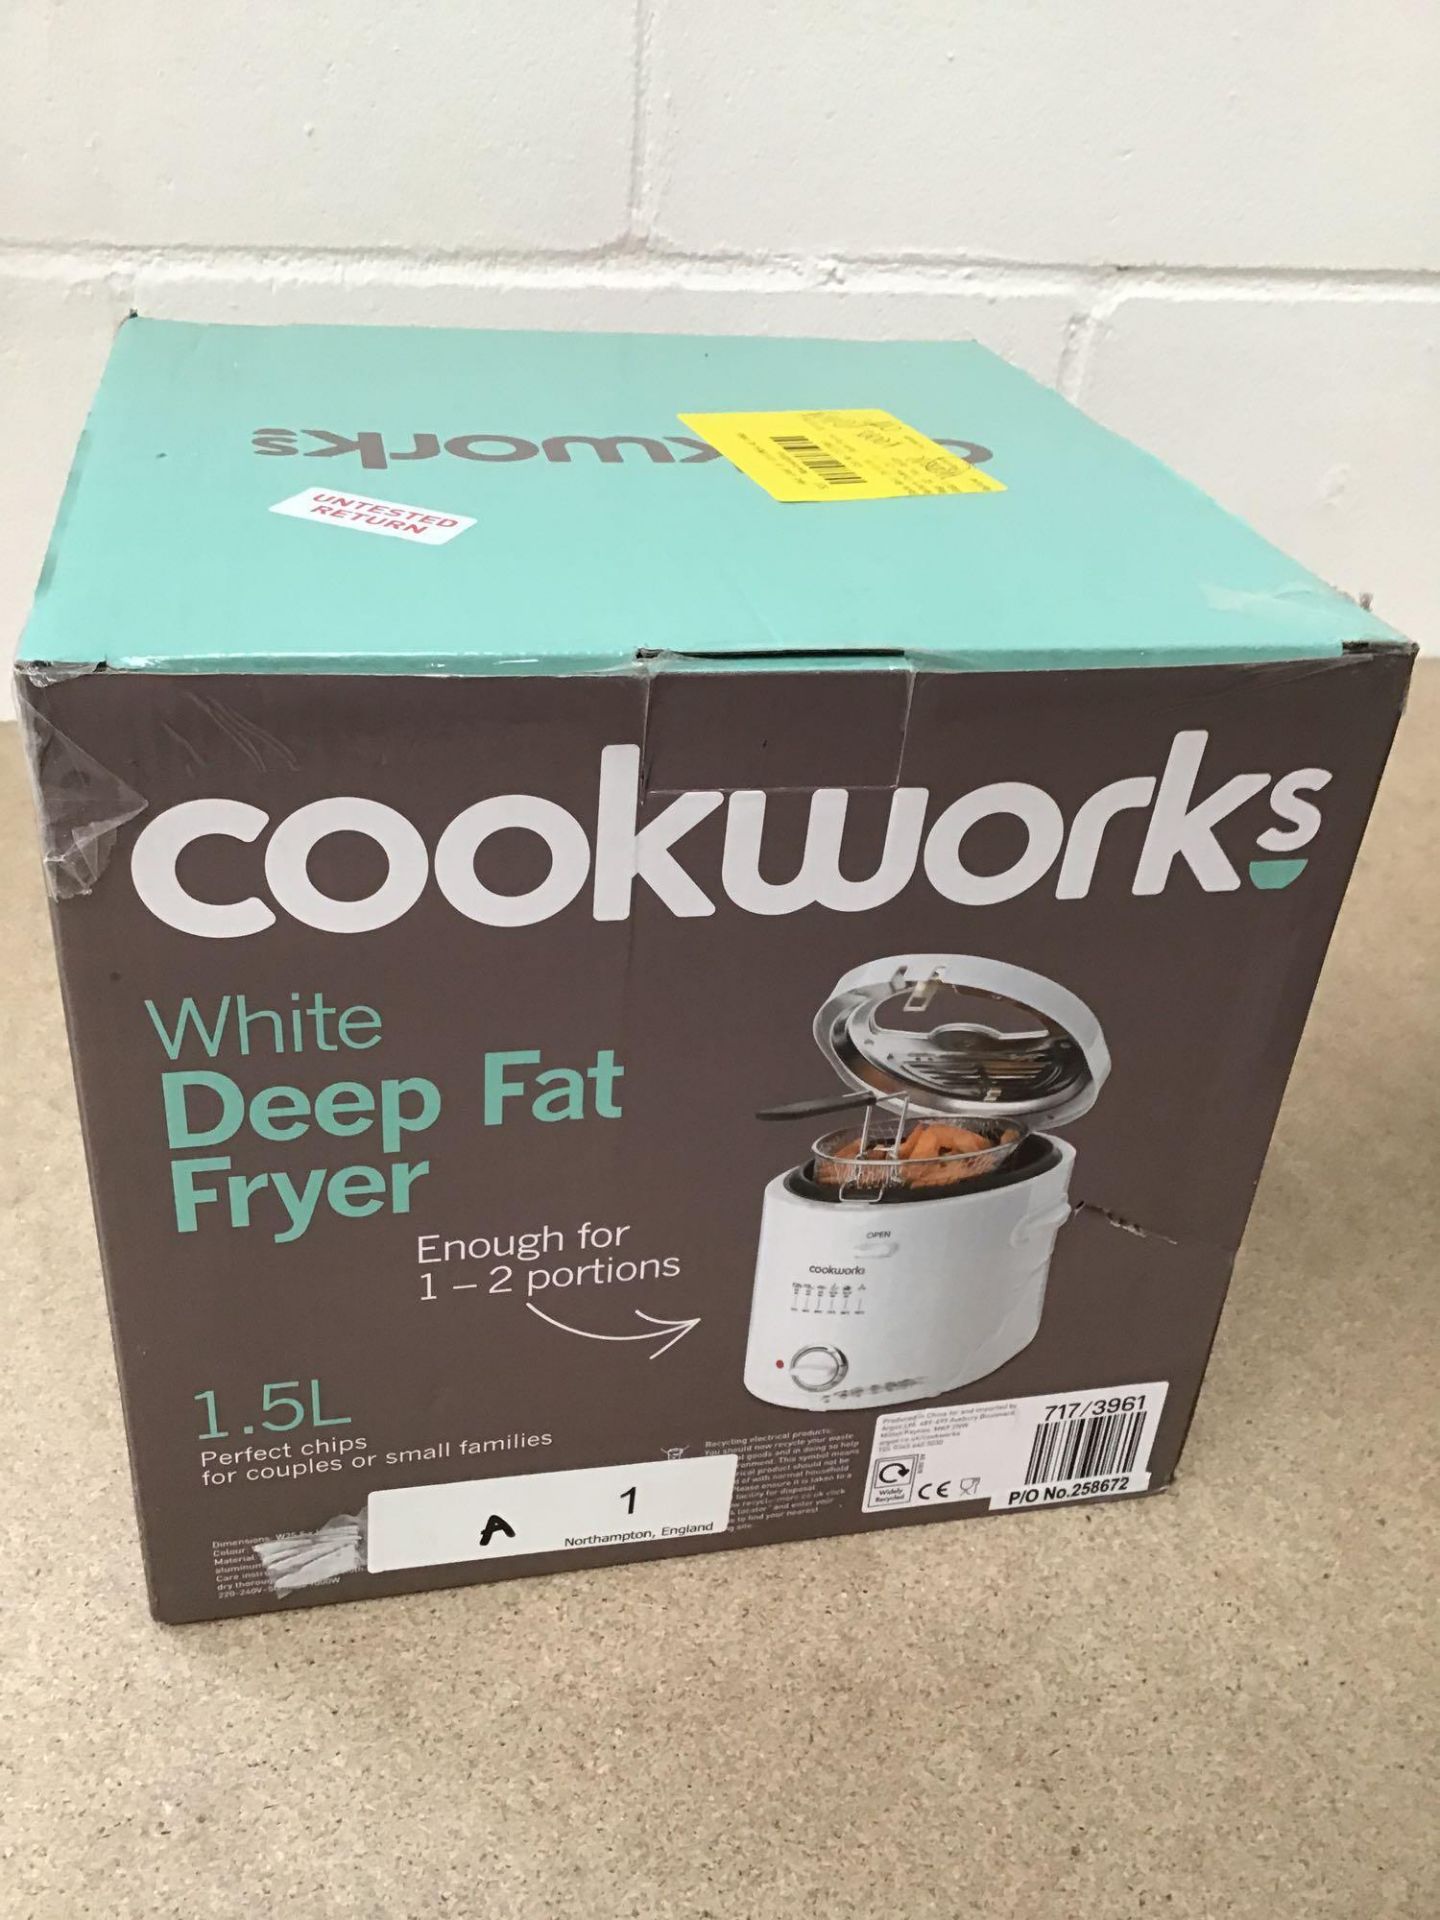 Cookworks 1.5L Deep Fat Fryer - White, £14.99 RRP - Image 2 of 5